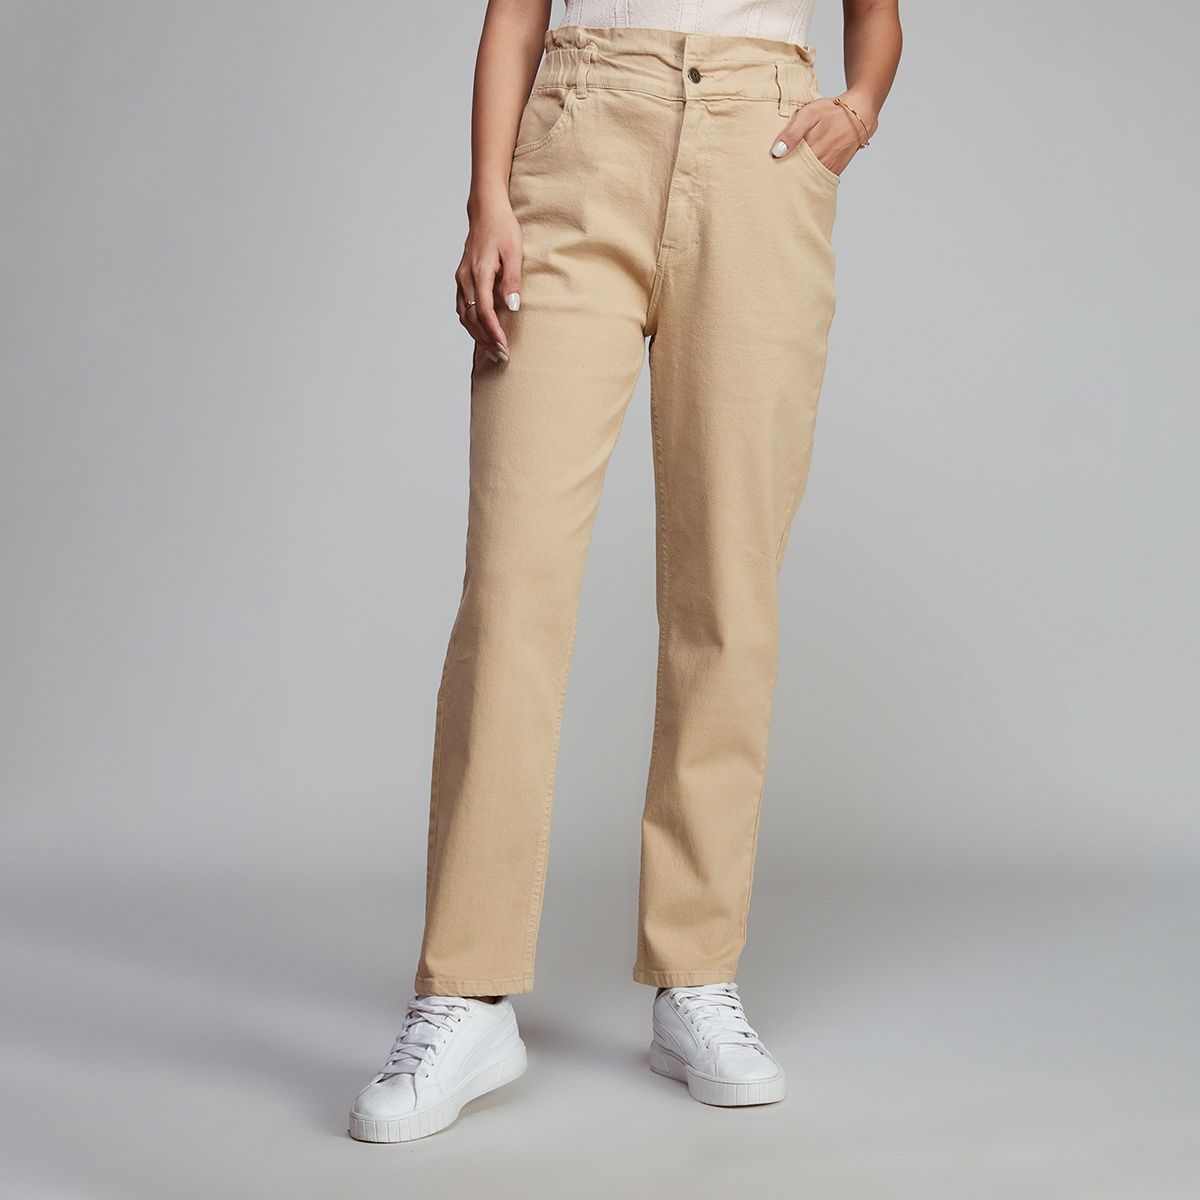 Polo Ralph Lauren Stretch Denim 5-Pocket Jeans - Westport Big & Tall